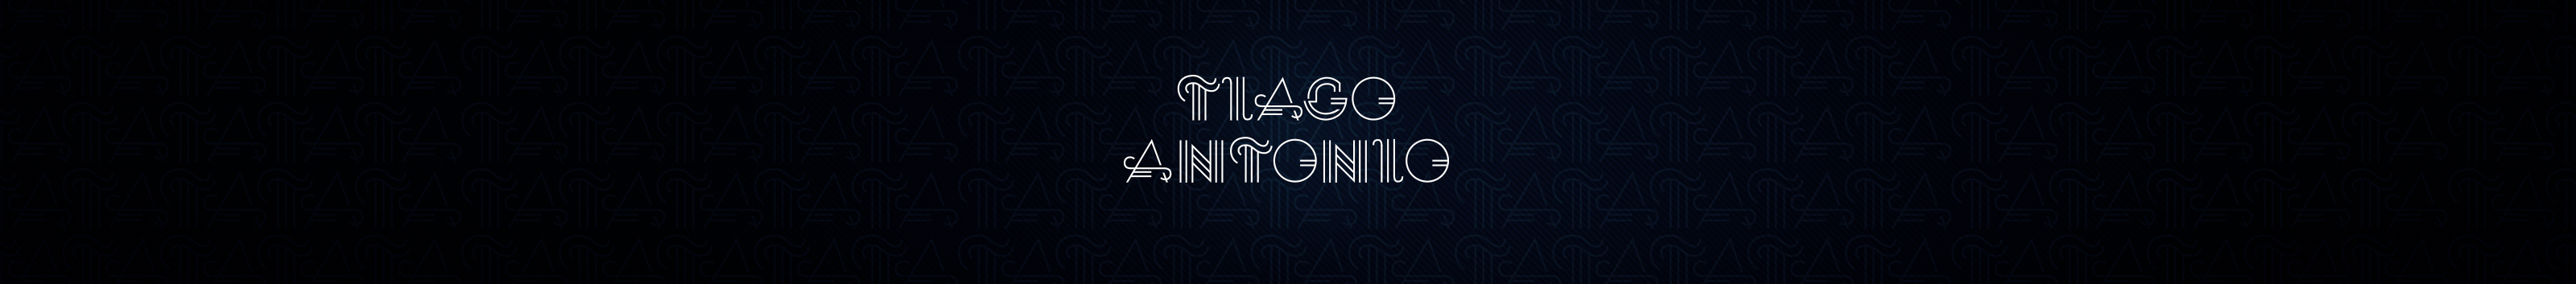 Tiago Antonio's profile banner